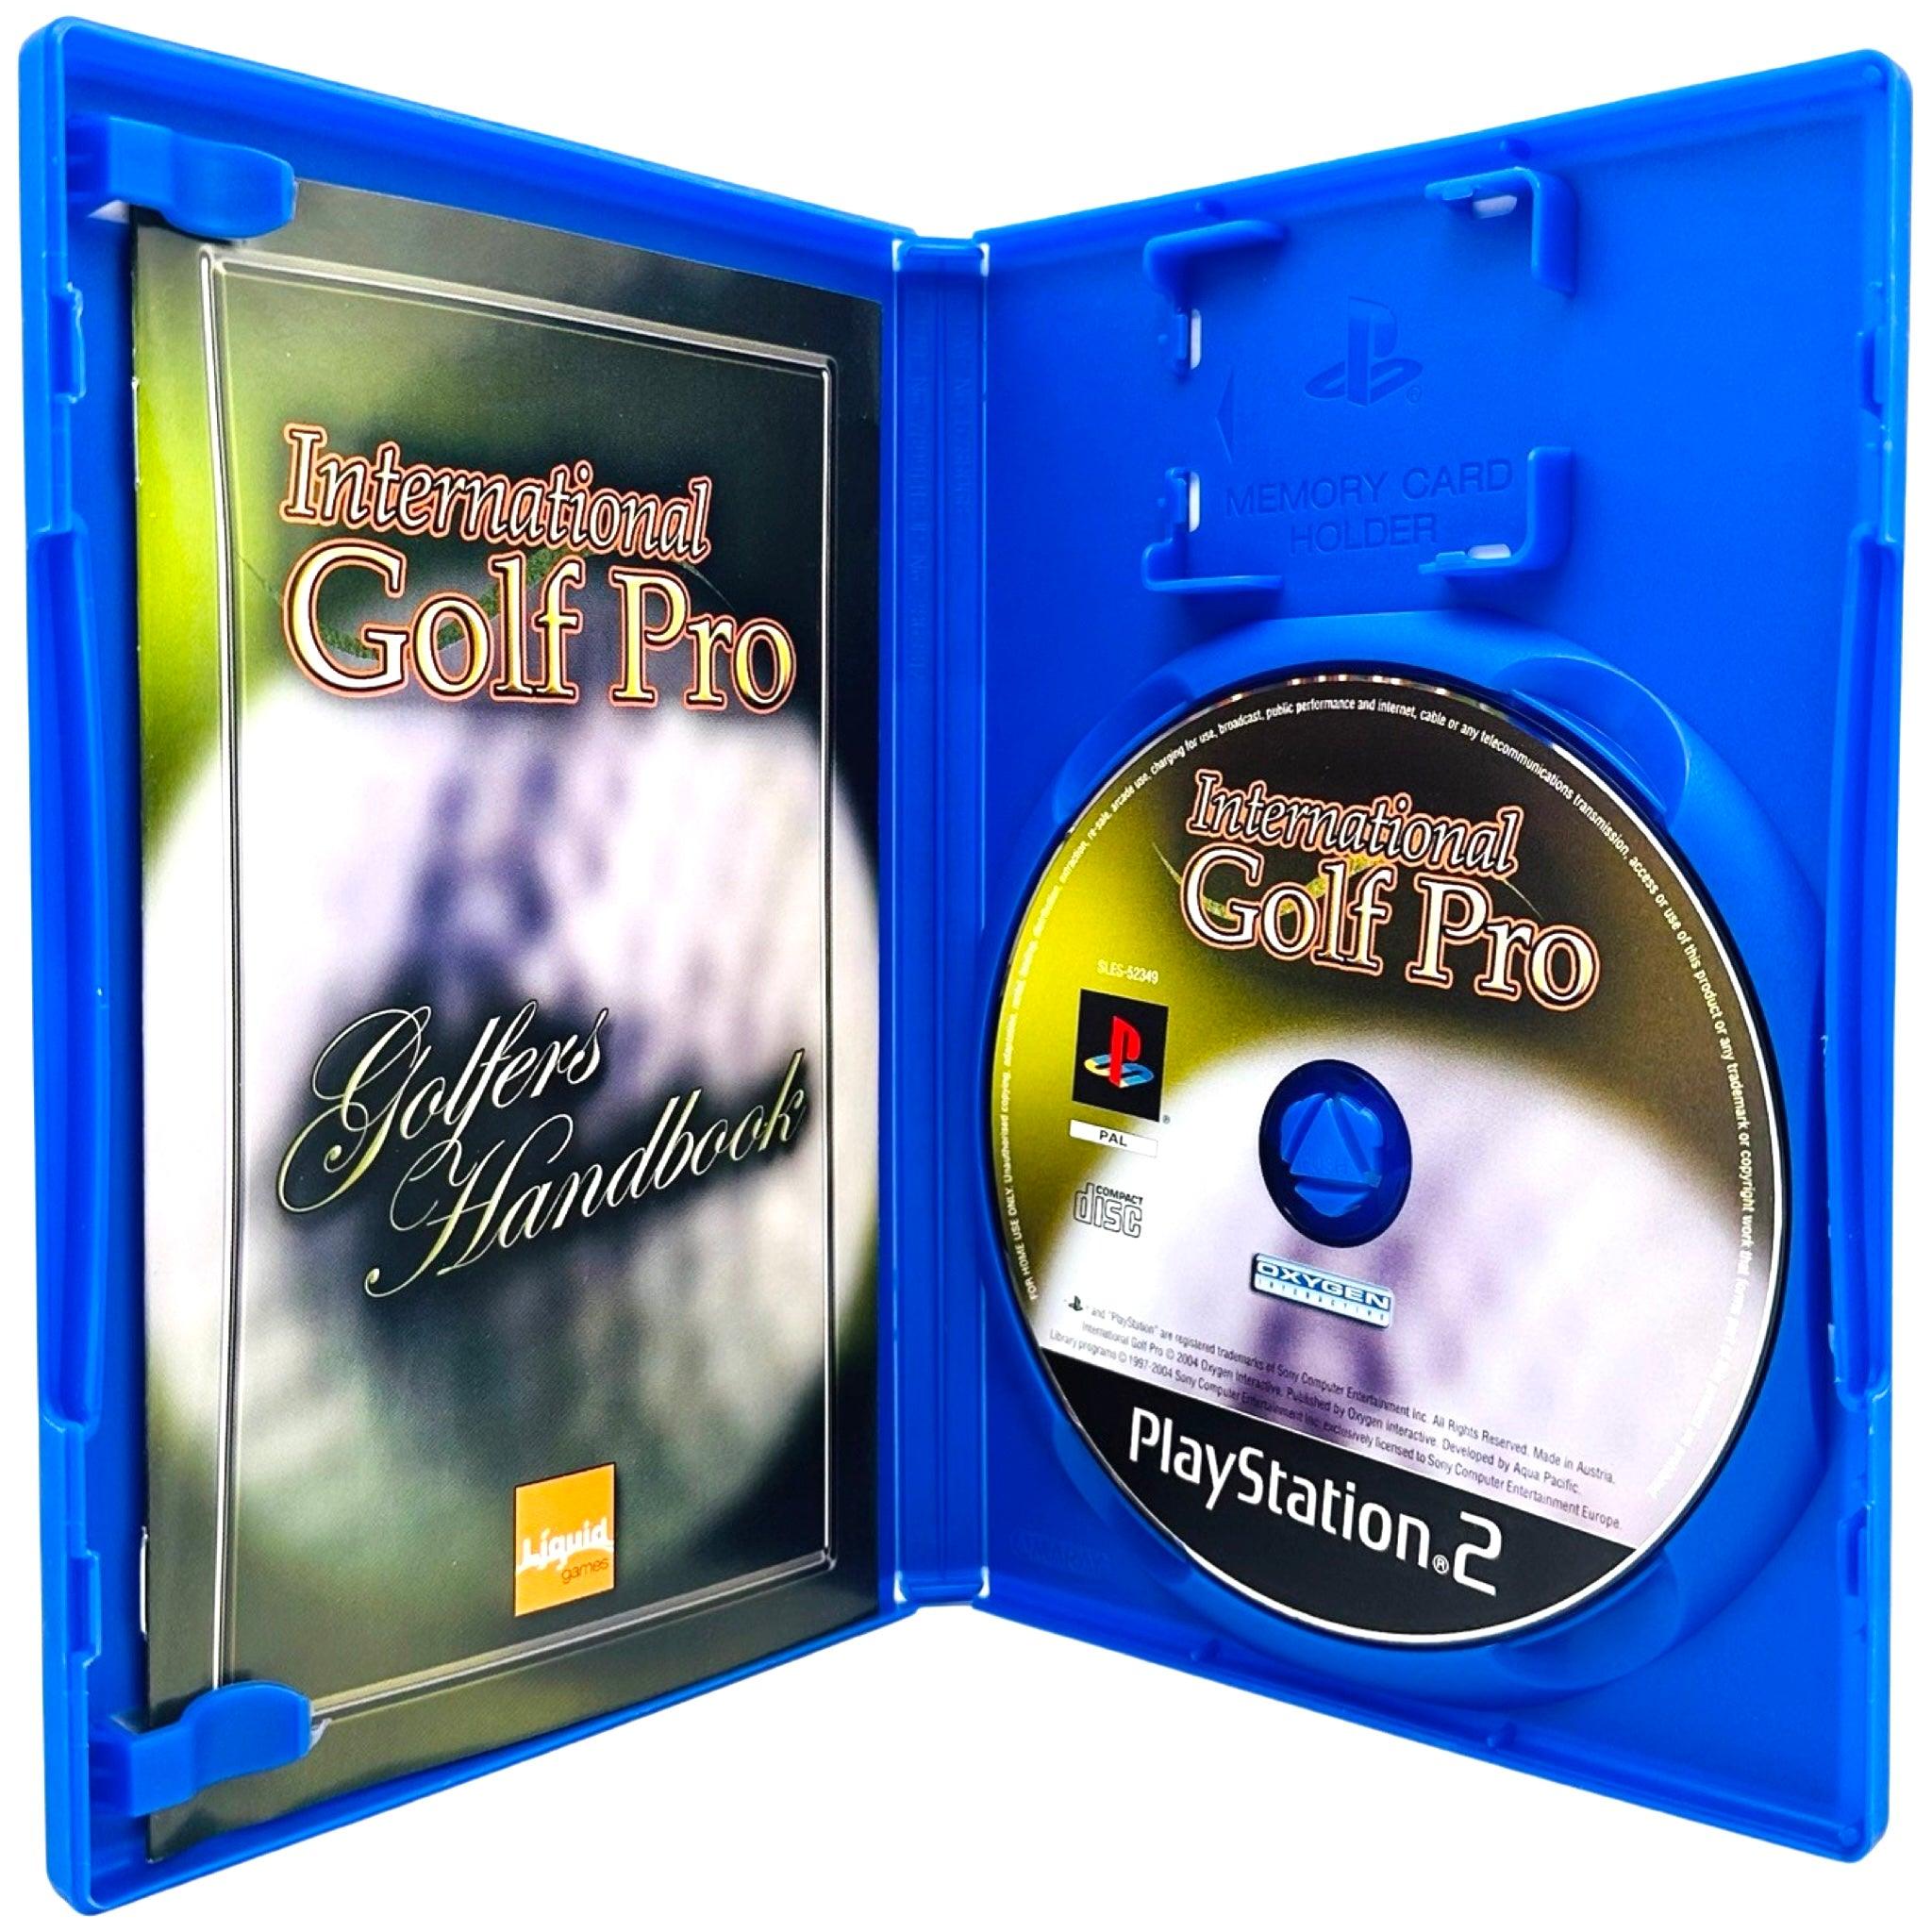 PS2: International Golf Pro - RetroGaming.no